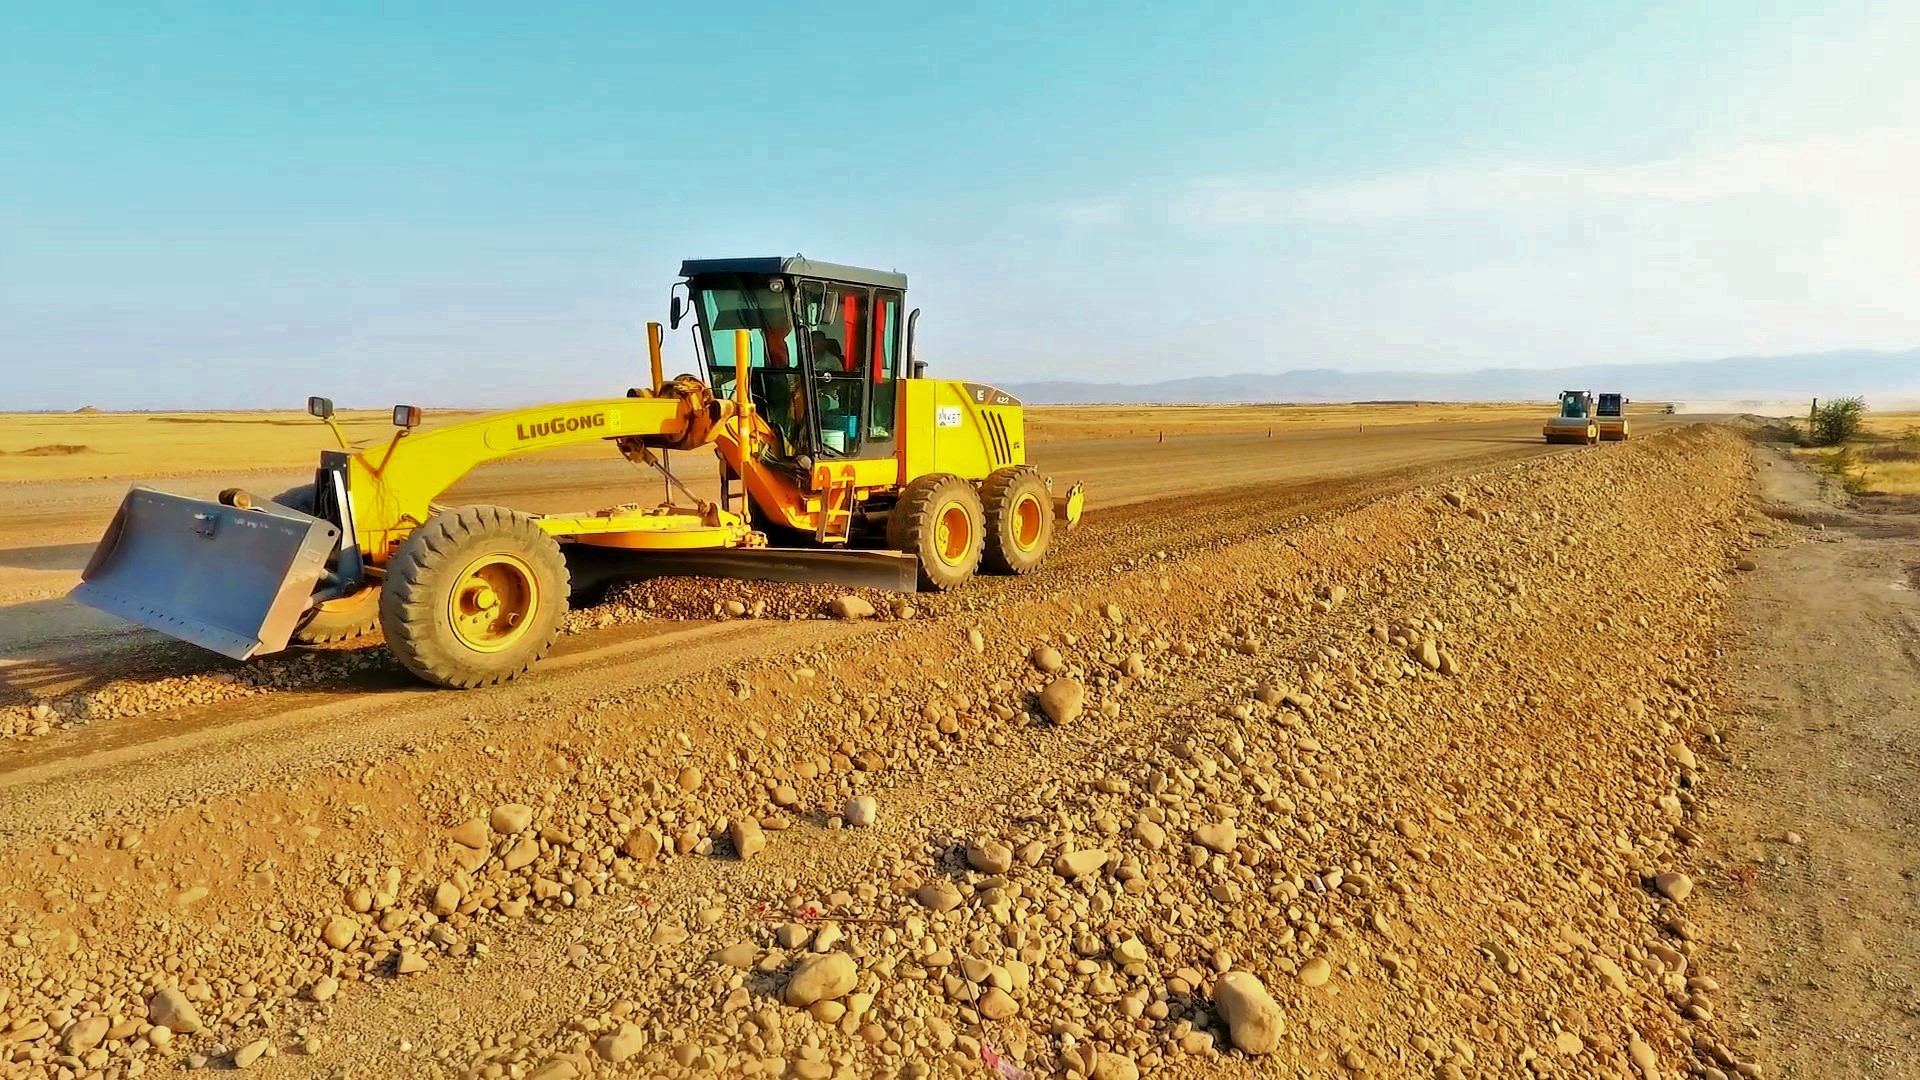 Azerbaijan continues construction of Barda-Aghdam highway following presidential order (PHOTO)